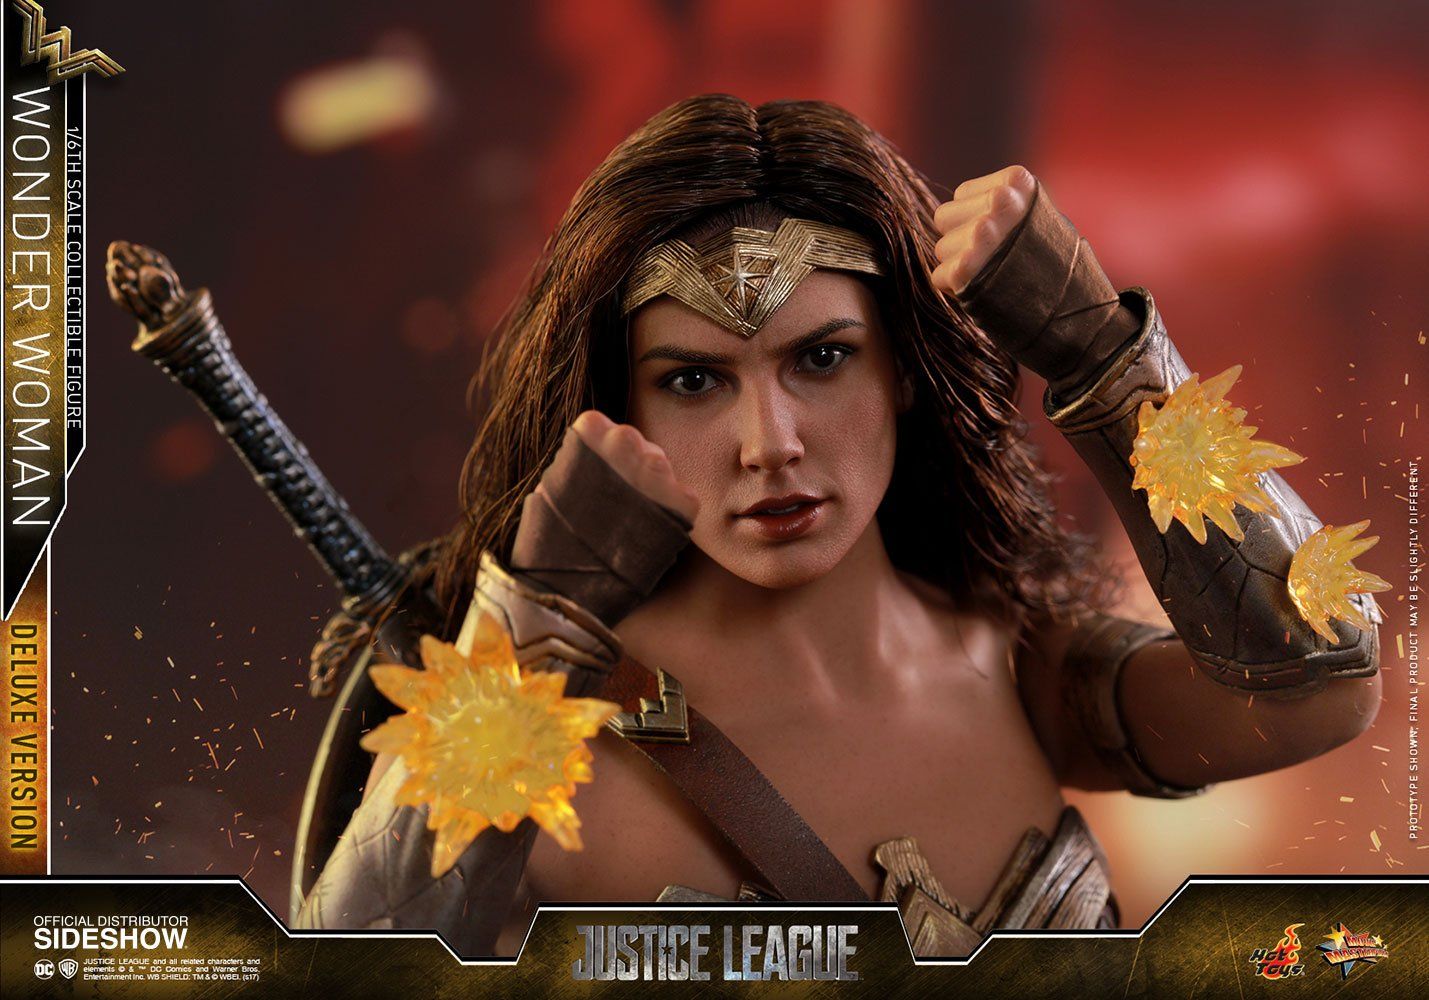 Action Figure Mulher Maravilha Wonder Woman: Liga da Justiça Justice League Dc Comics Deluxe Movie Masterpiece MMS451 1/6 - Hot Toys